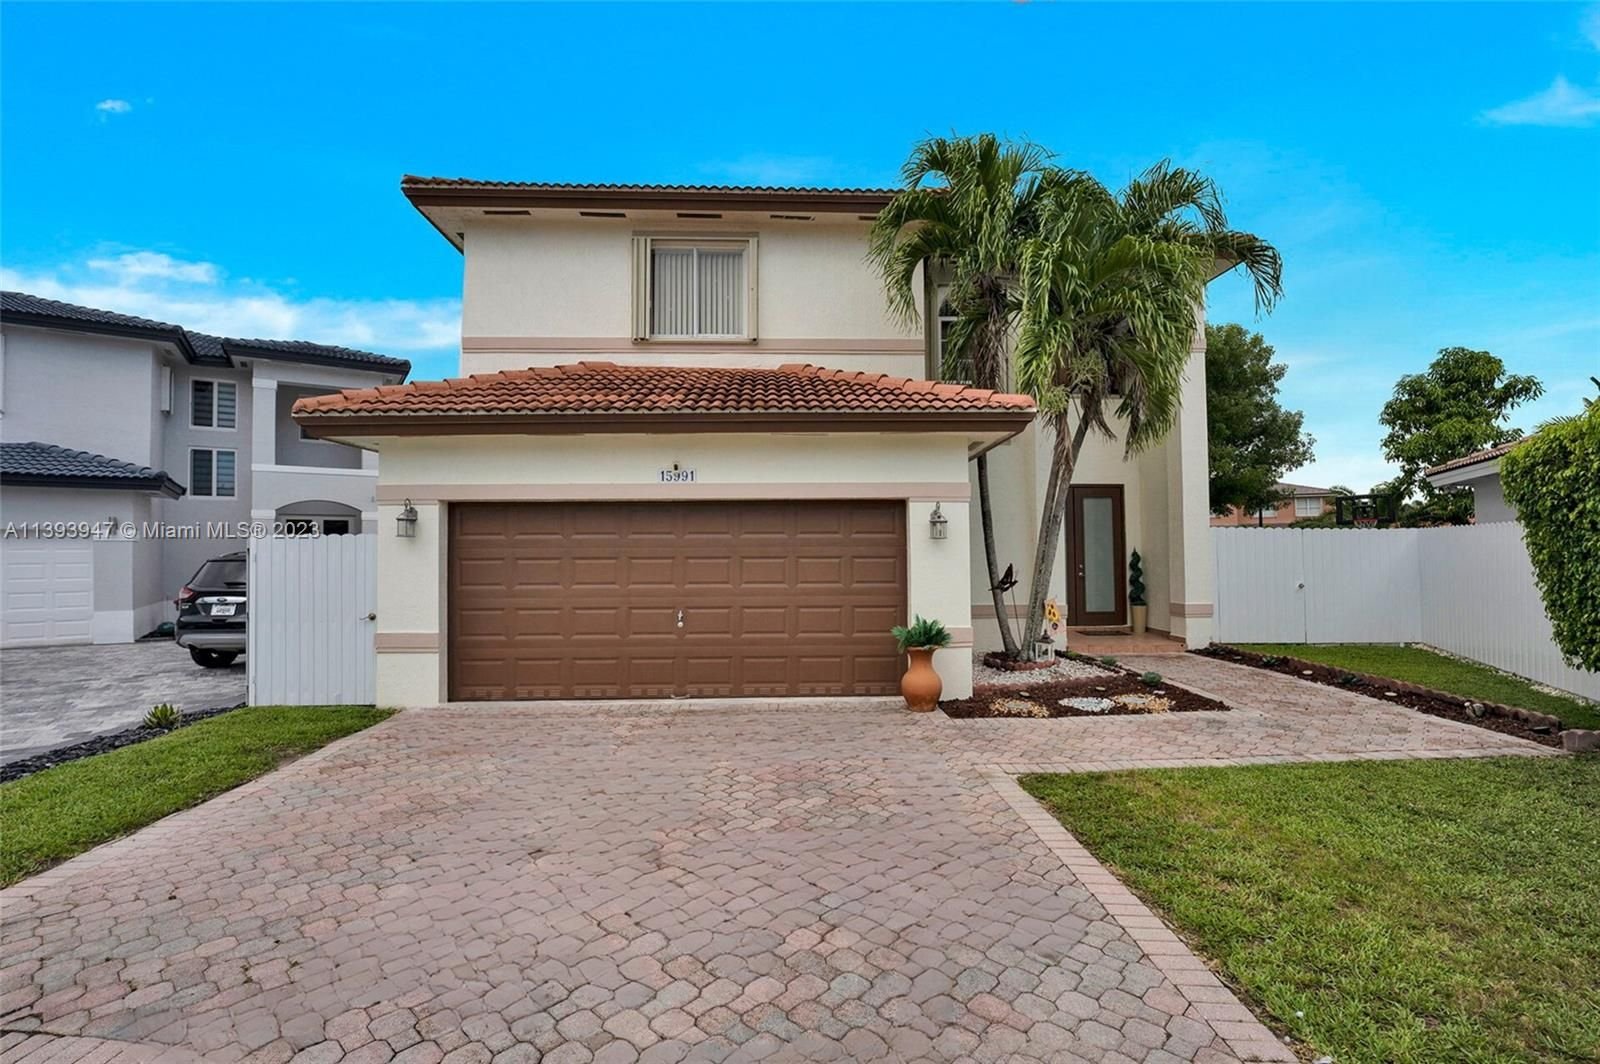 Real estate property located at 15991 64th Ter, Miami-Dade County, Miami, FL